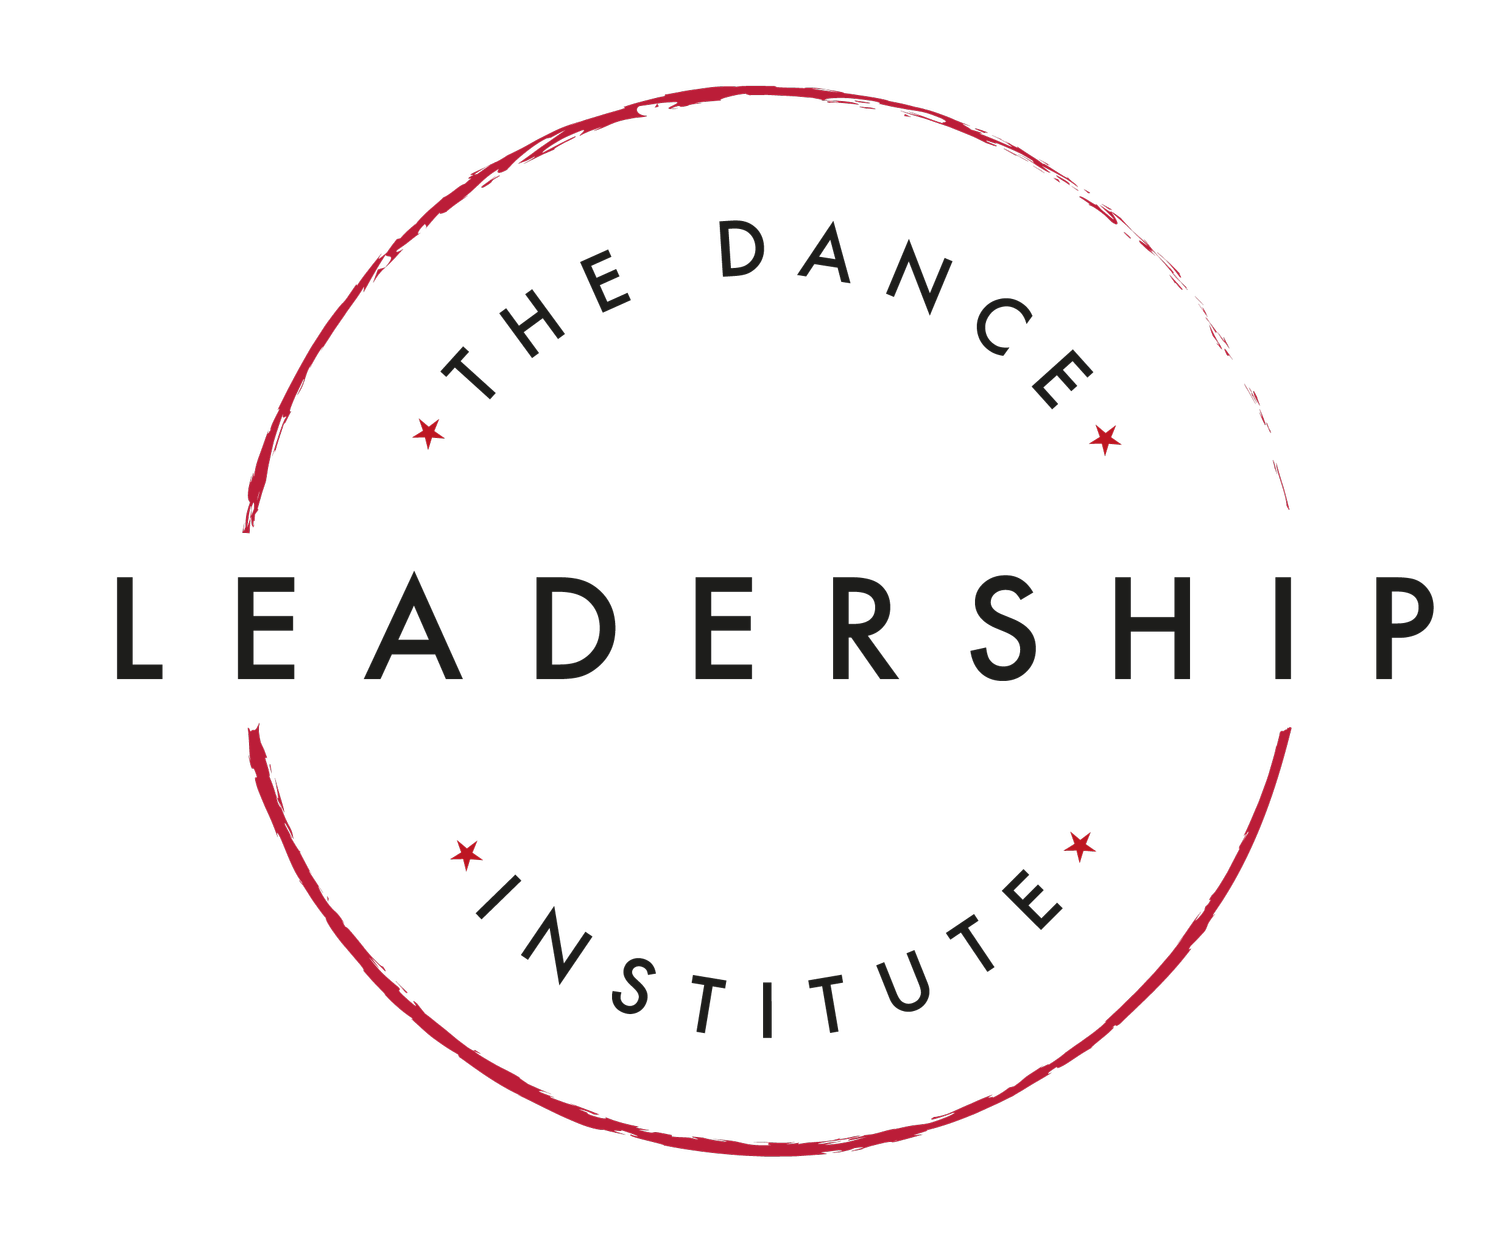 The Dance Leadership Institute